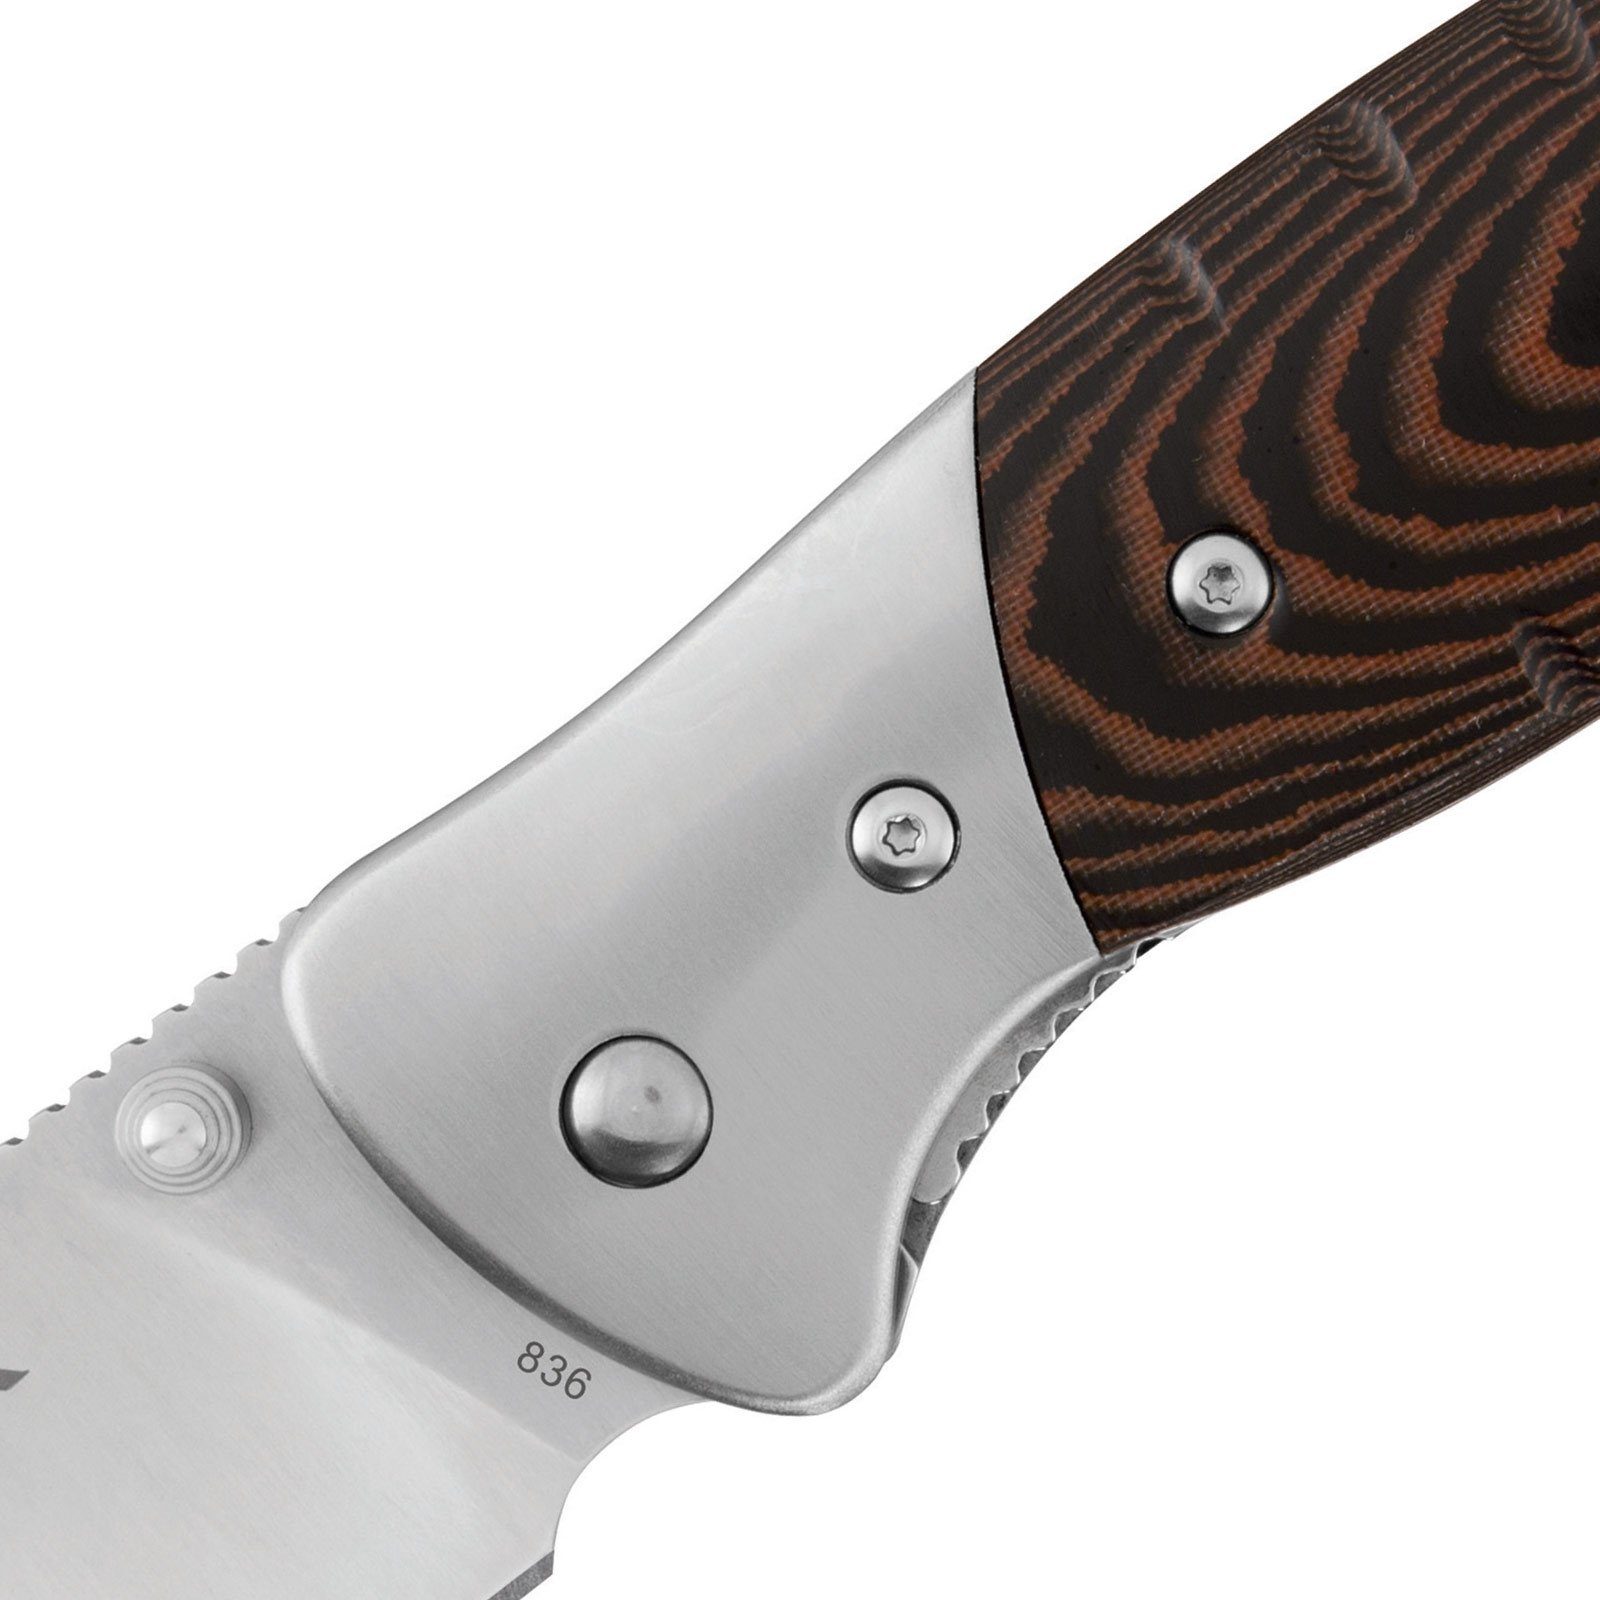 Taschenmesser Knives Selkirk Groß Buck Large Survival Klappmesser Taschenmesser Einhandmesser Messer,